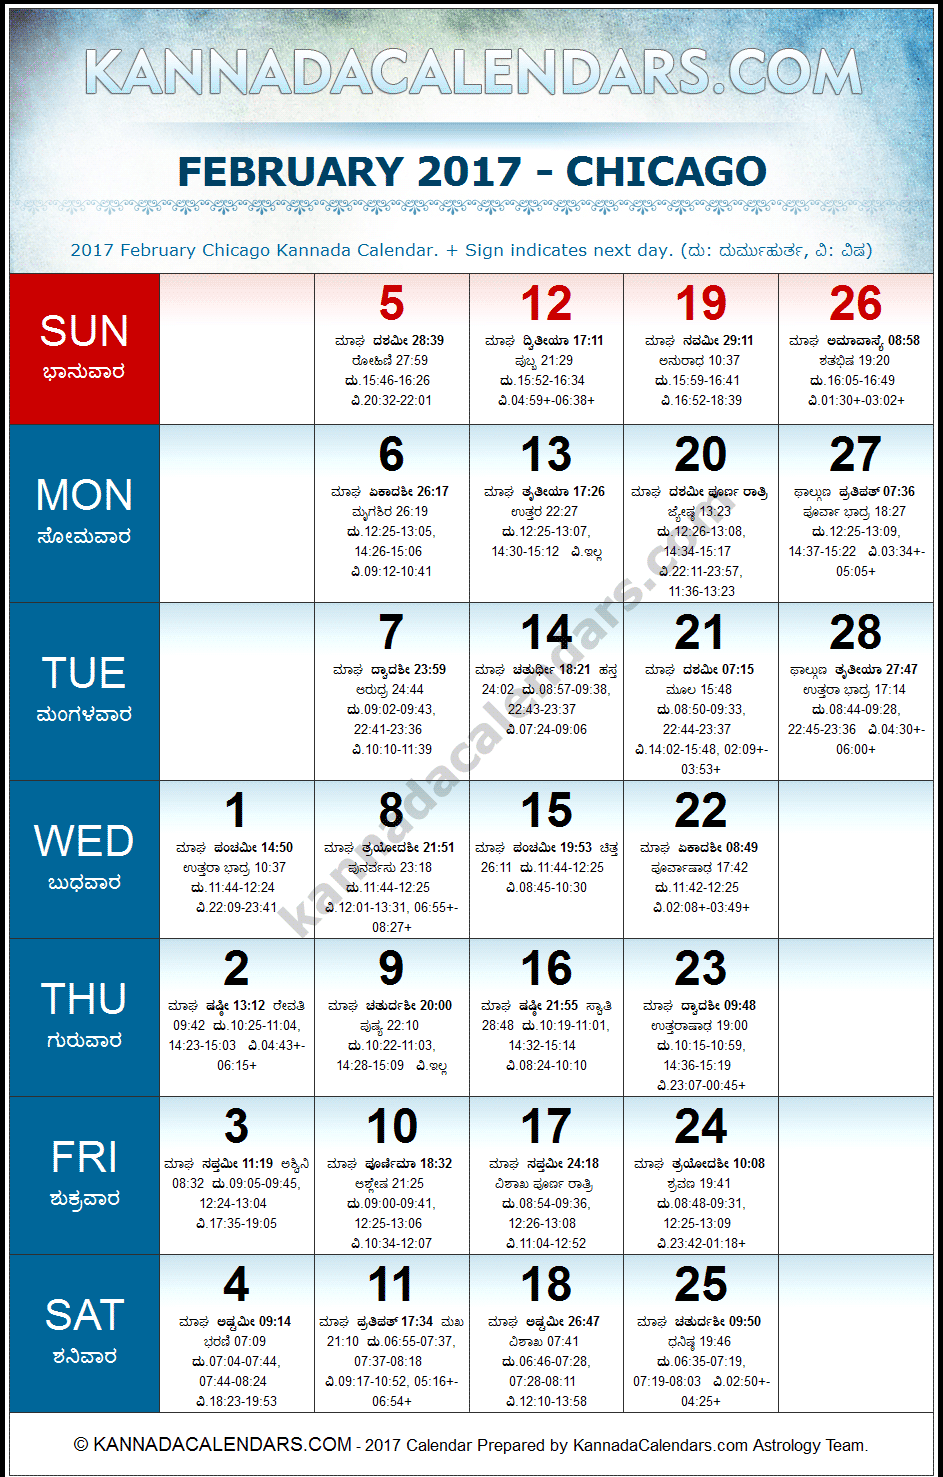 February 2017 Kannada Calendar for Chicago, USA